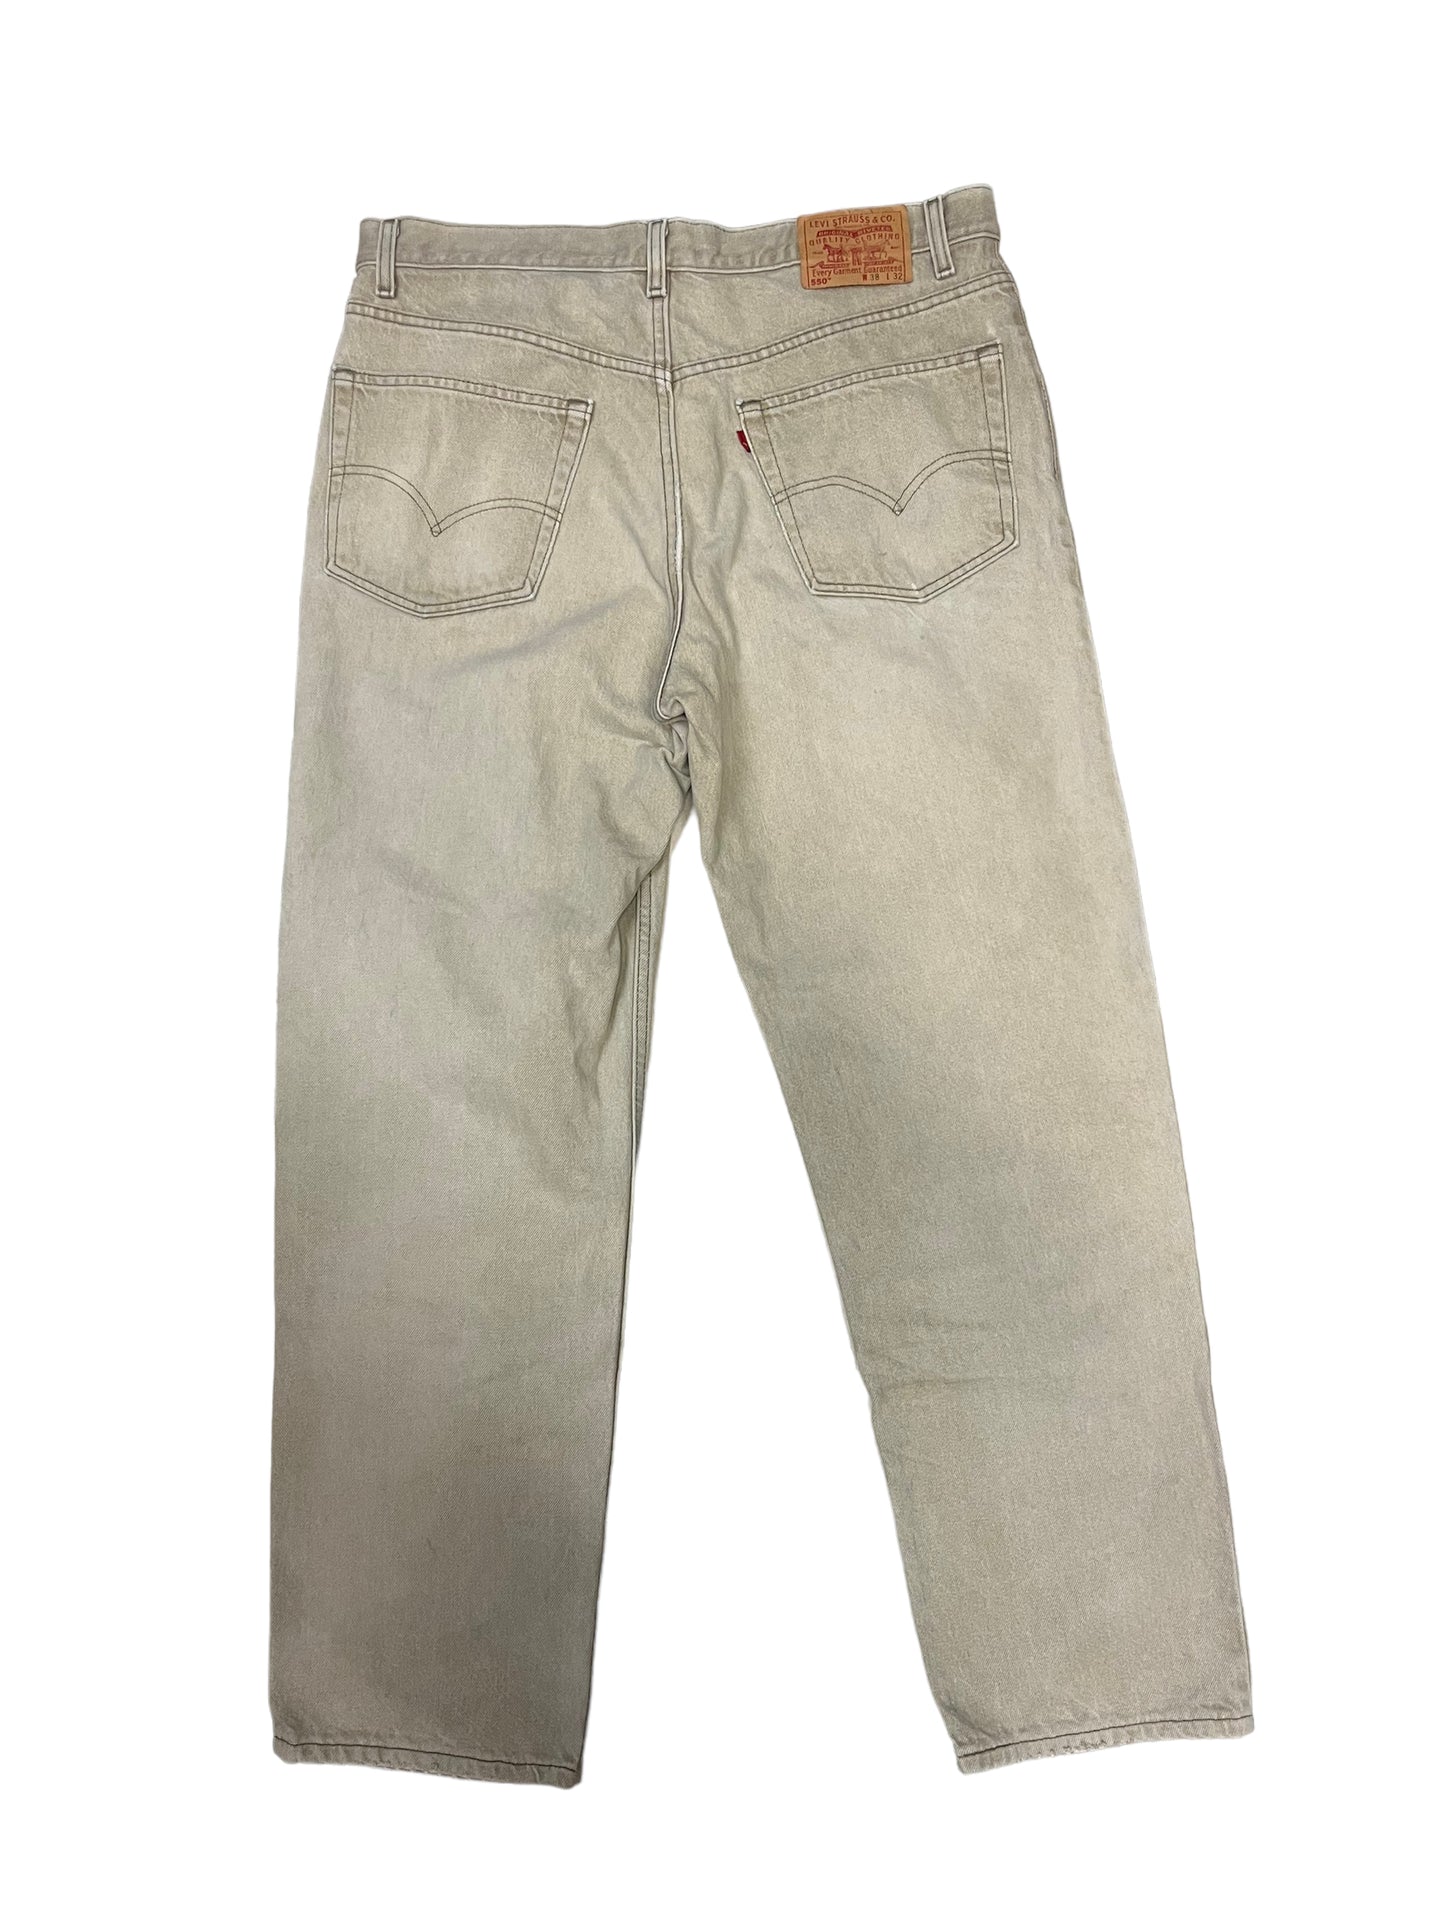 (37W x 32L) Vintage Levi’s 550 Tan Jeans